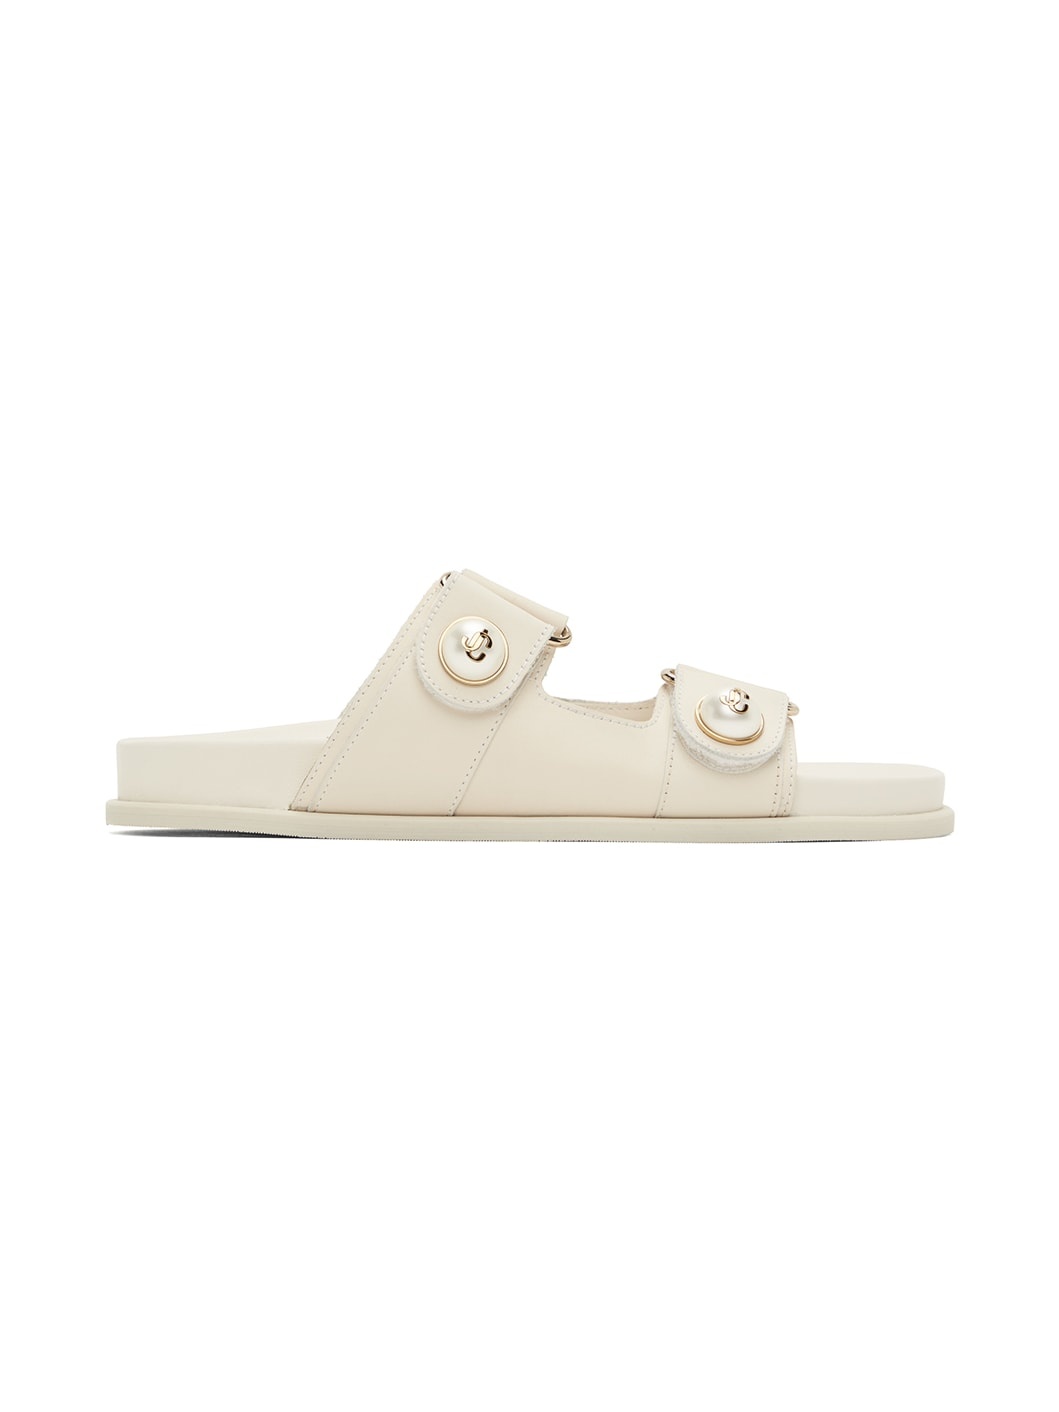 Off-White Fayence Sandals - 1